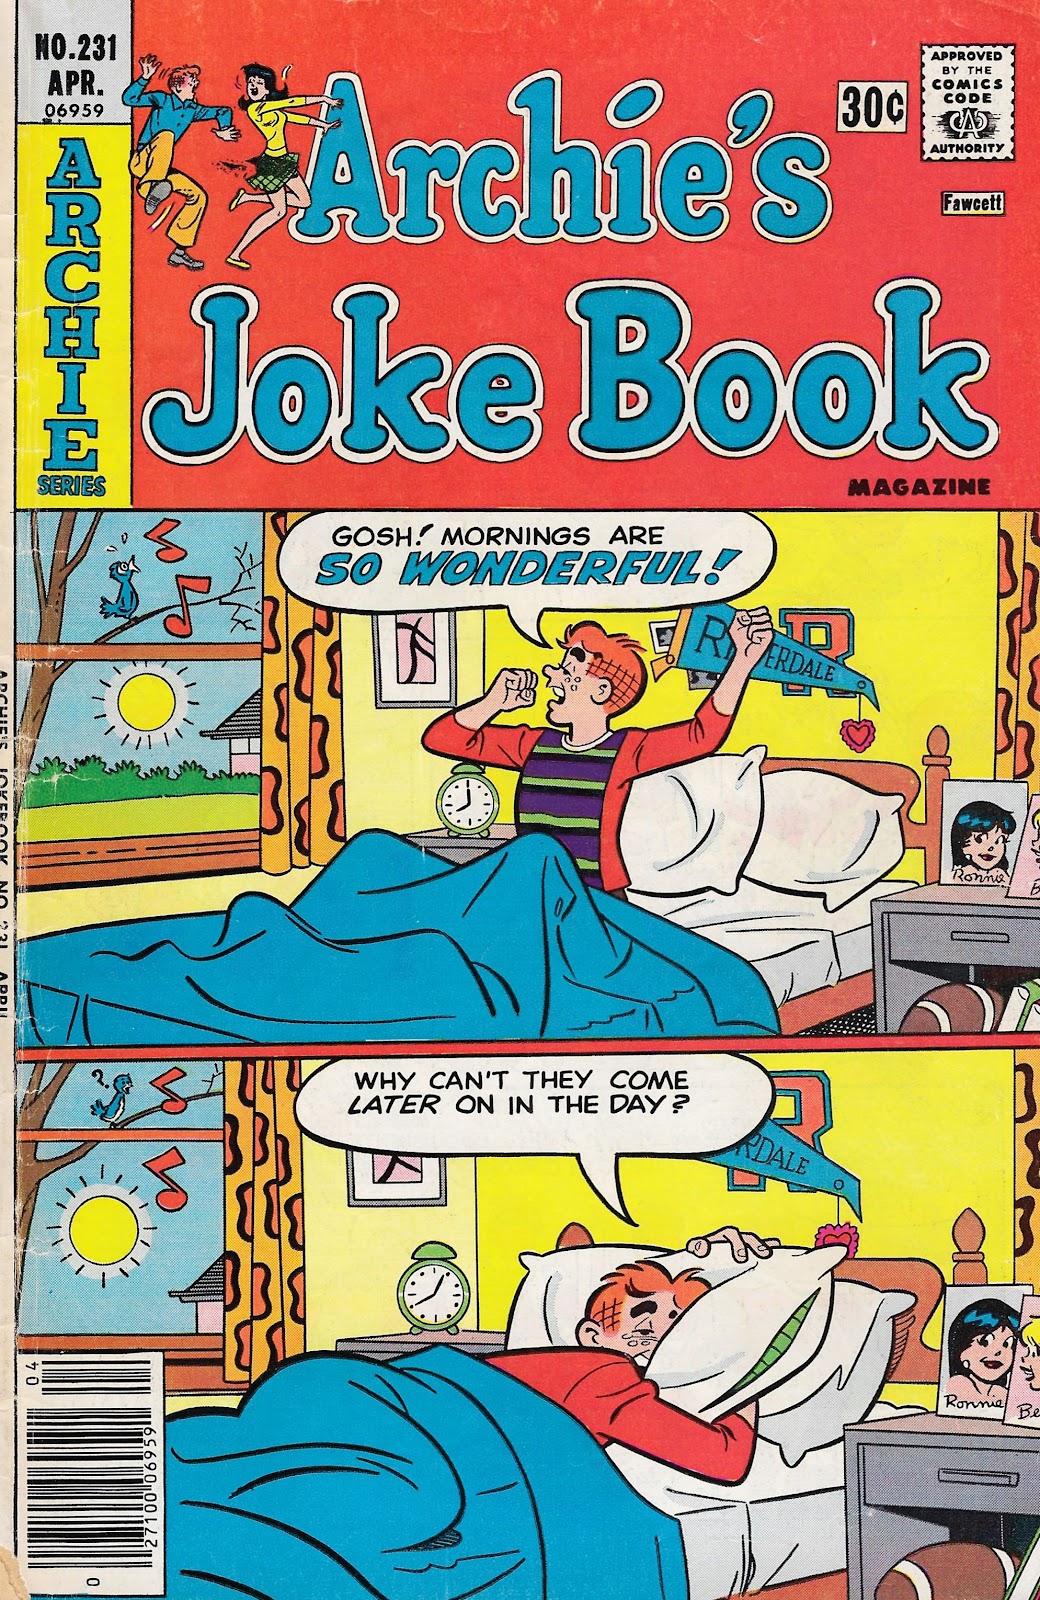 Archie's Joke Book Magazine issue 231 - Page 1